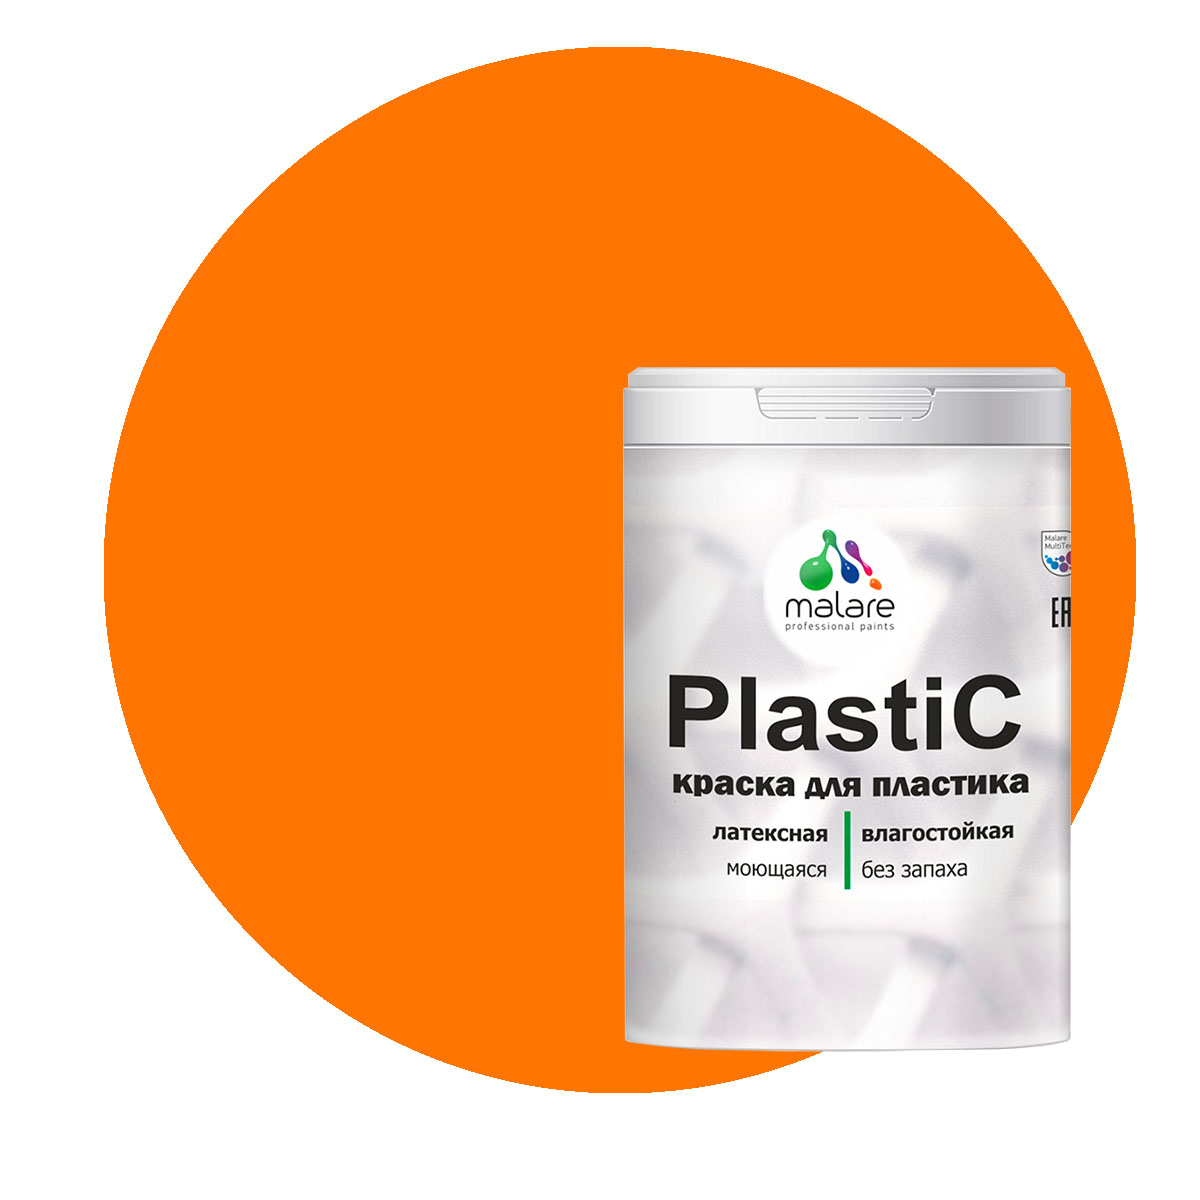 Краска Malare PlastiC для пластика, ПВХ, для сайдинга, сочный цитрус, 2 кг. краска malare plastic для пластика пвх для сайдинга оранжевый закат 2 кг